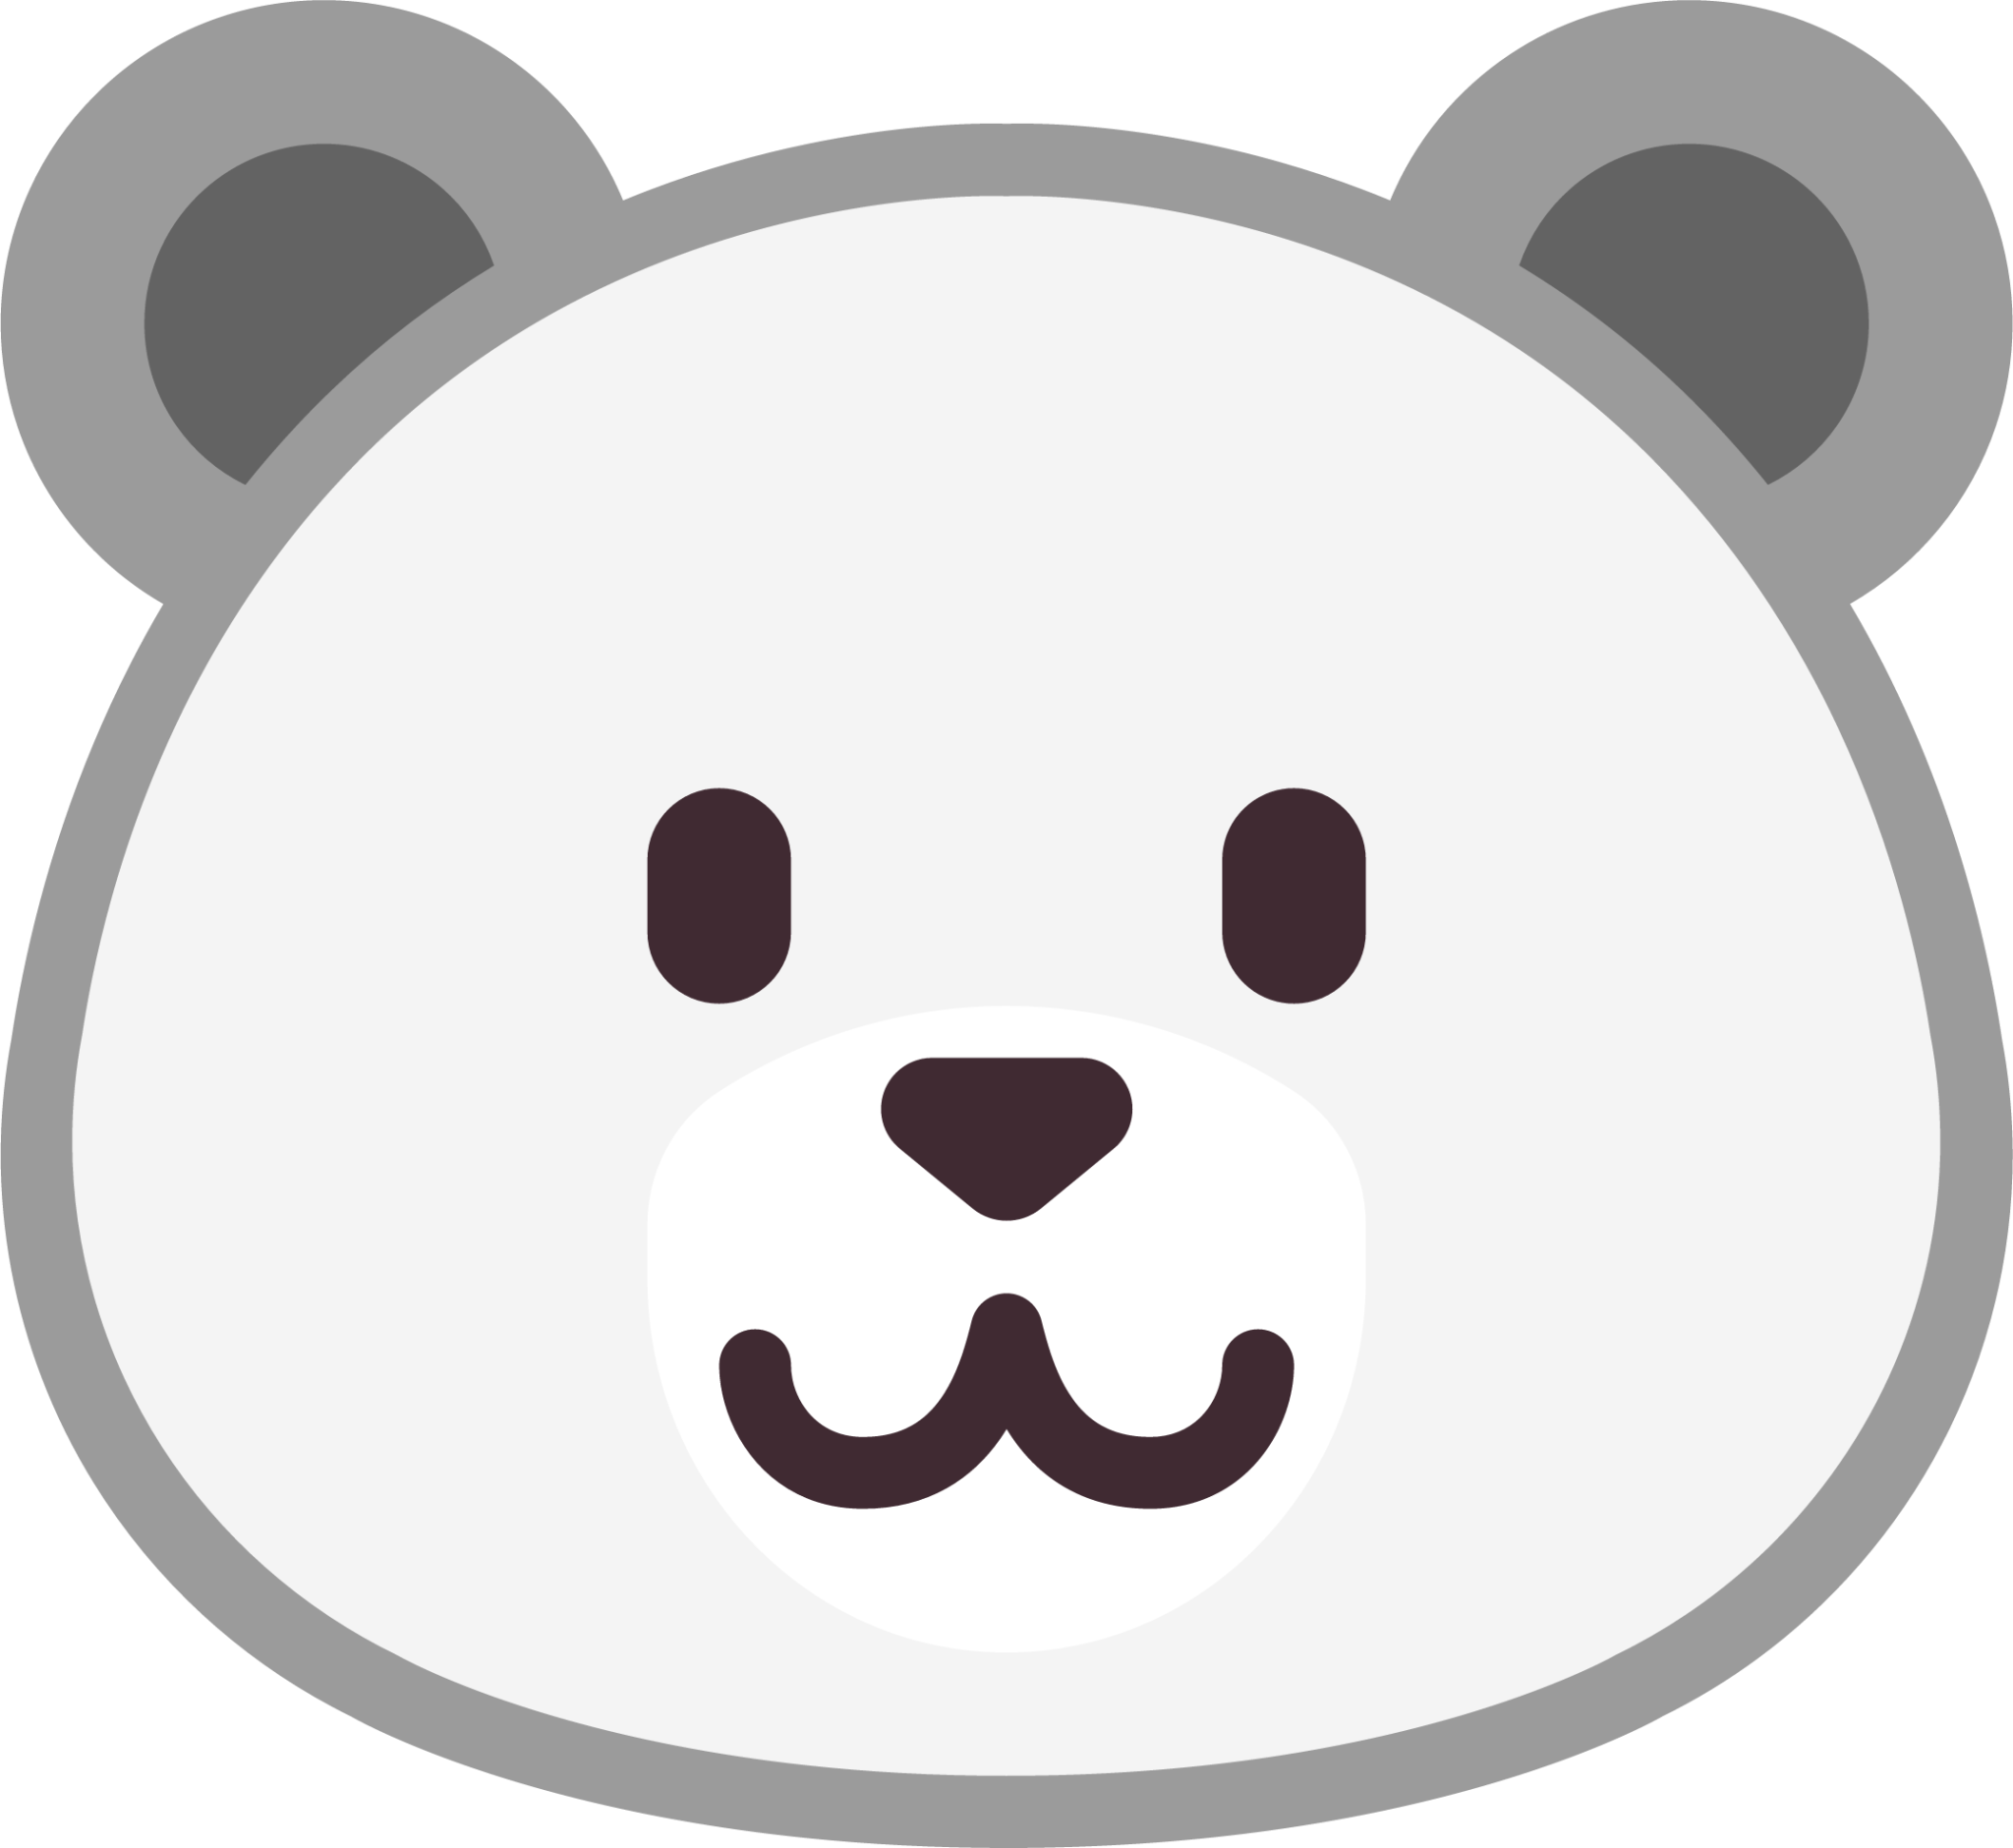 polar bear emoji